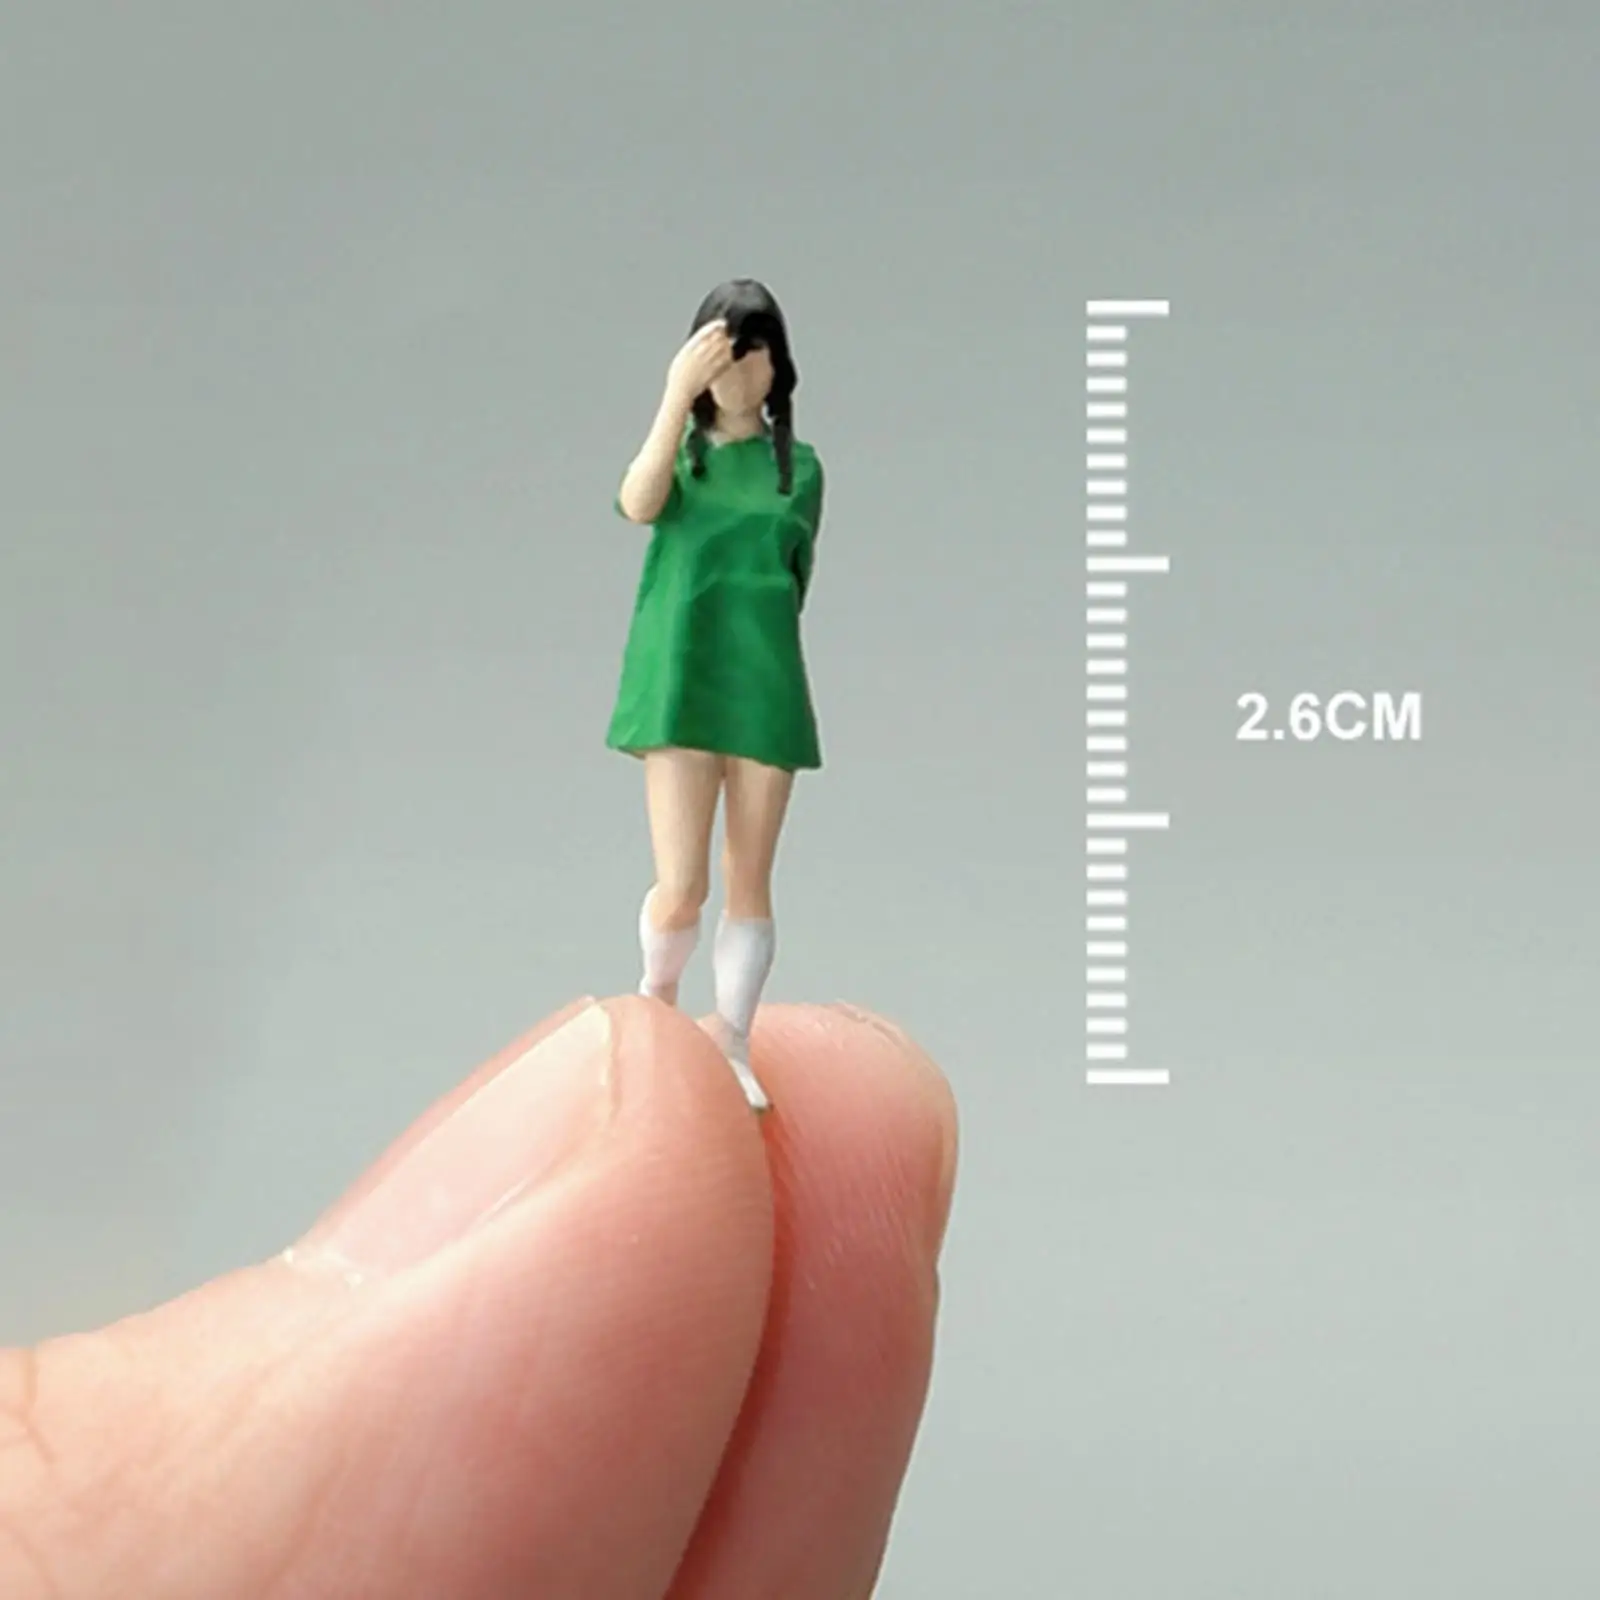 1/64 Diorama Figure Socks Girl for Dollhouse Accessories Model Building Kits